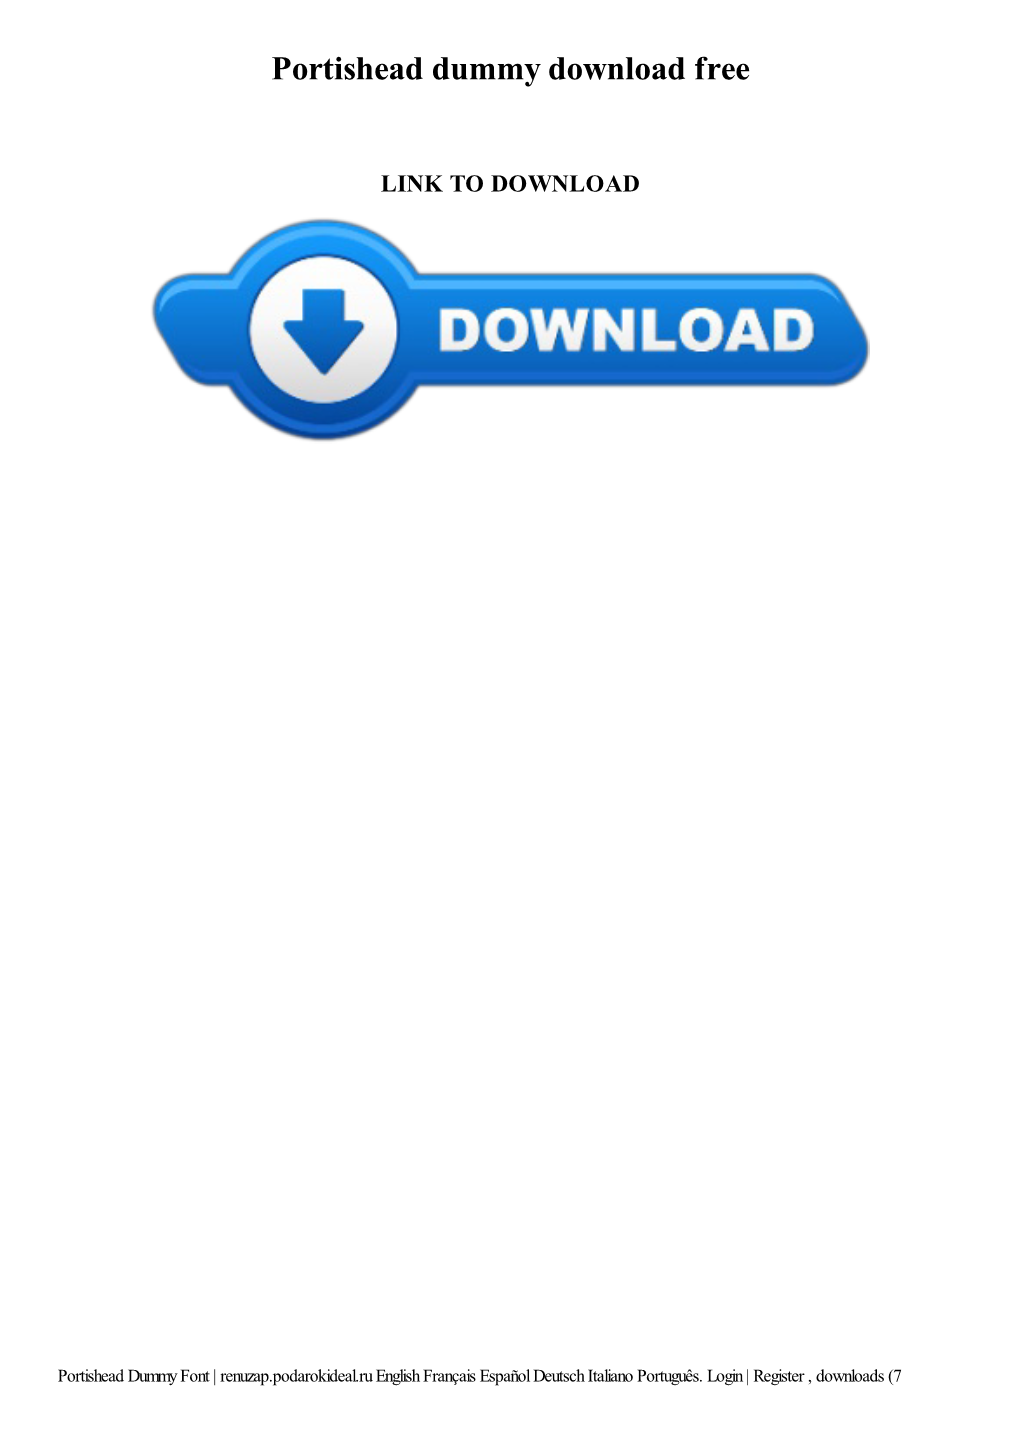 Portishead Dummy Download Free